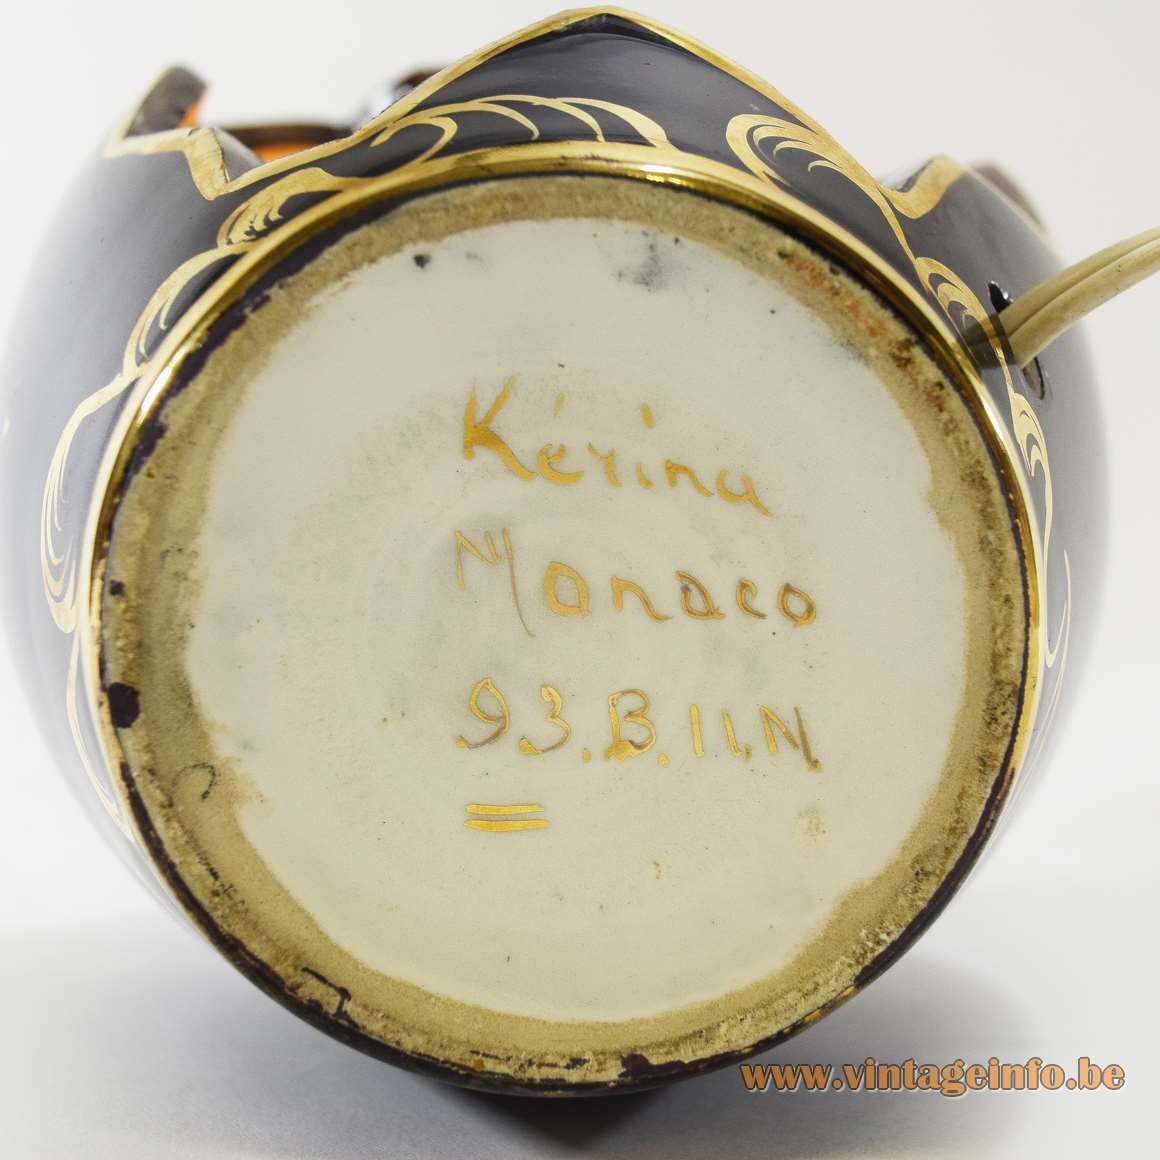 Kérina Monaco Table Lamp - Signature on the bottom of the base